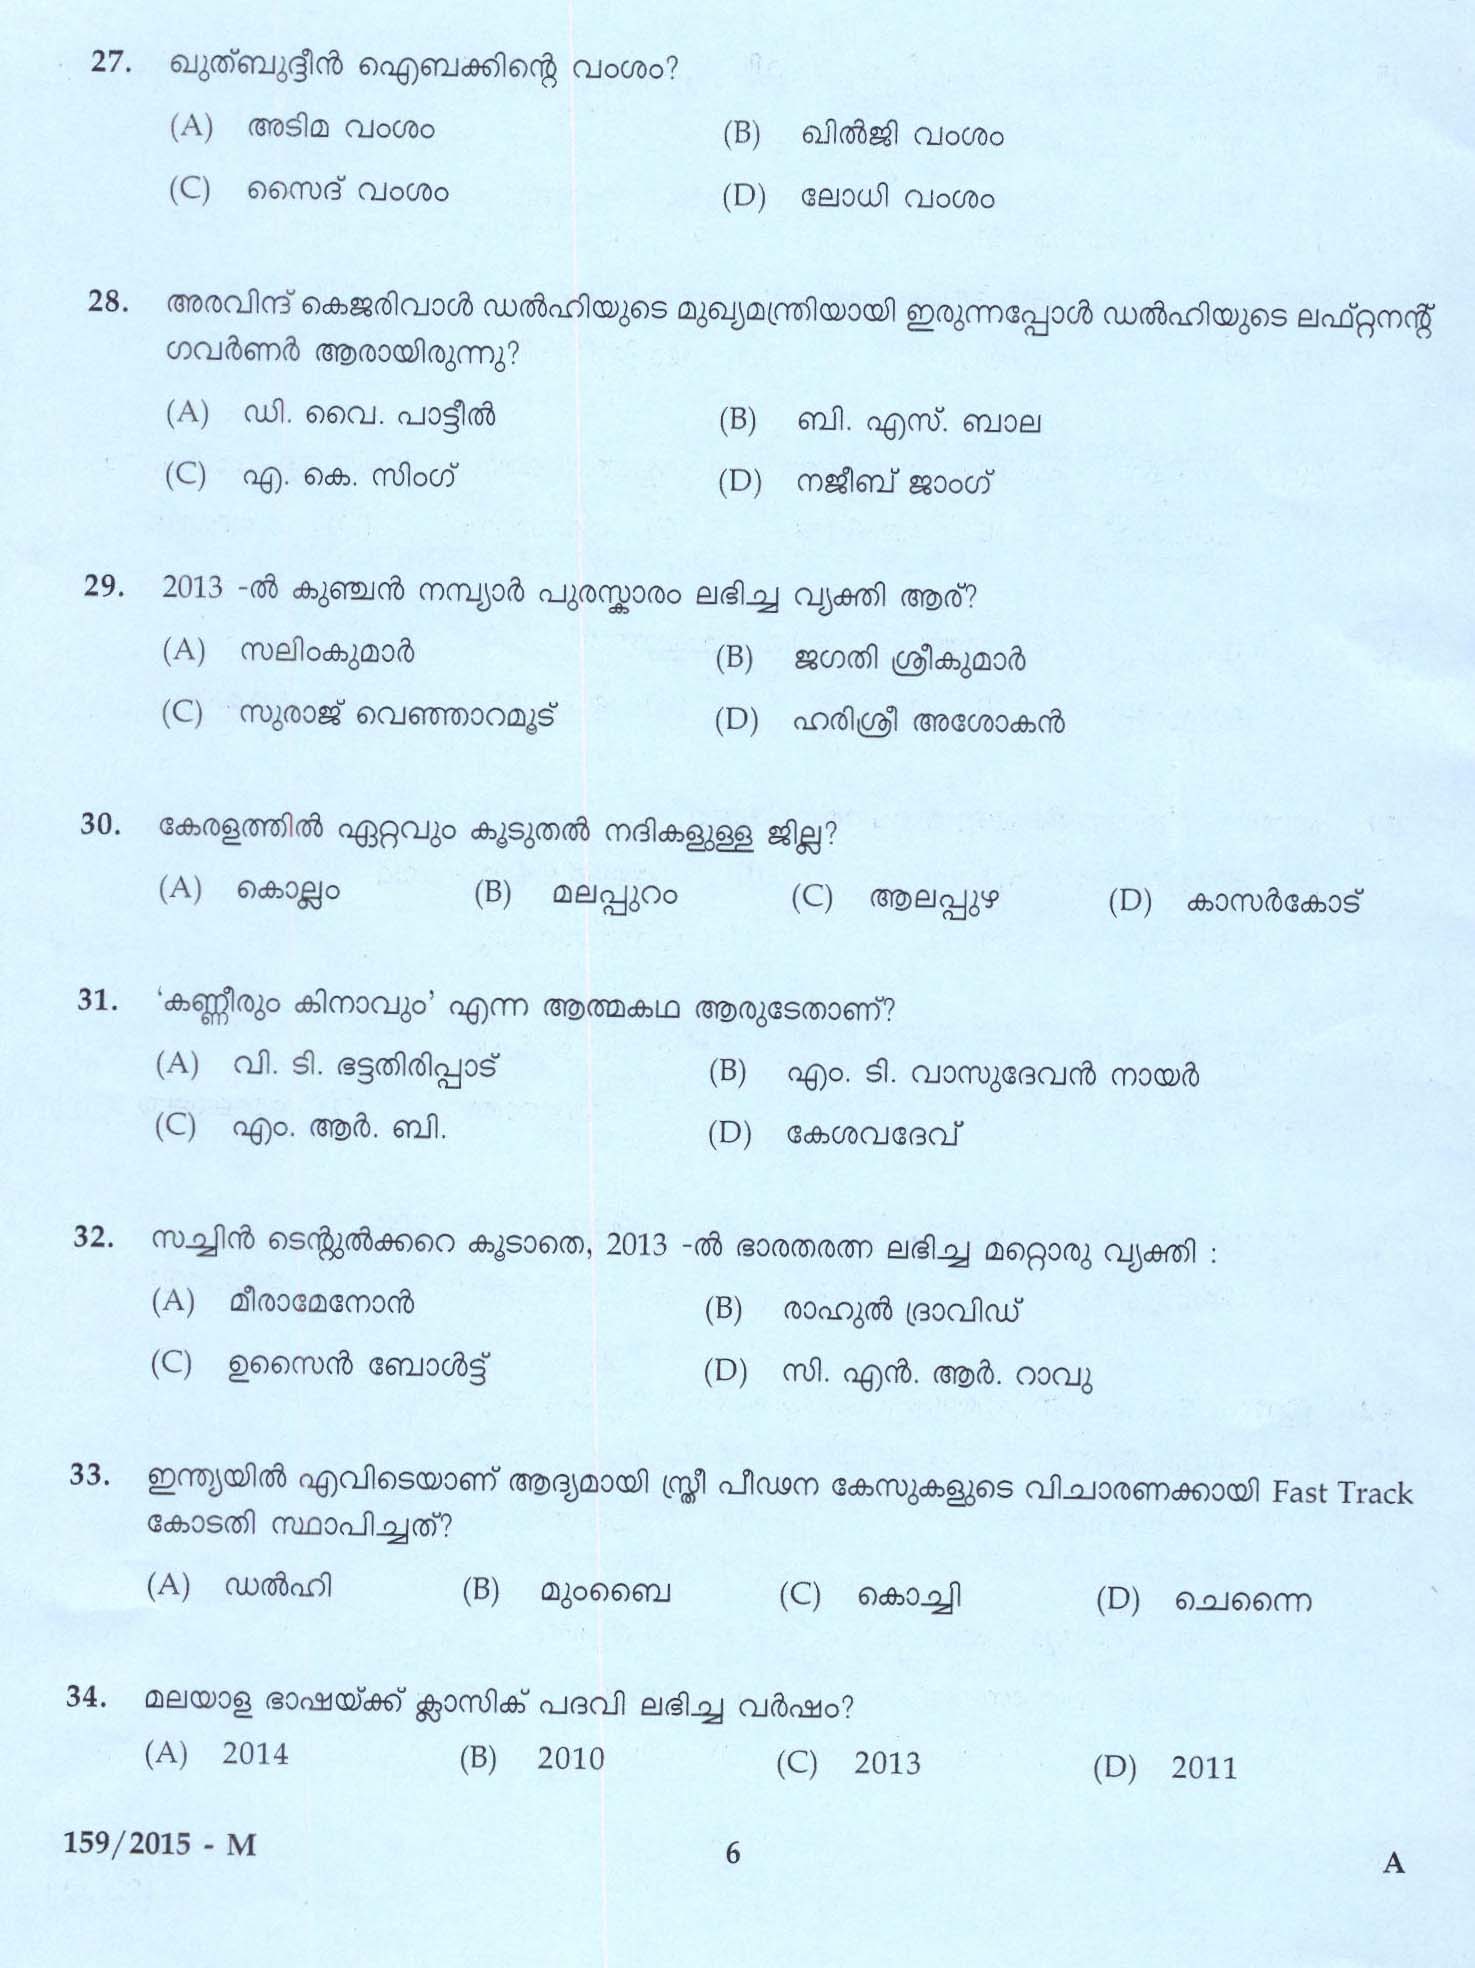 Kerala PSC Security Guard Exam 2015 Question Paper Code 1592015 M 4